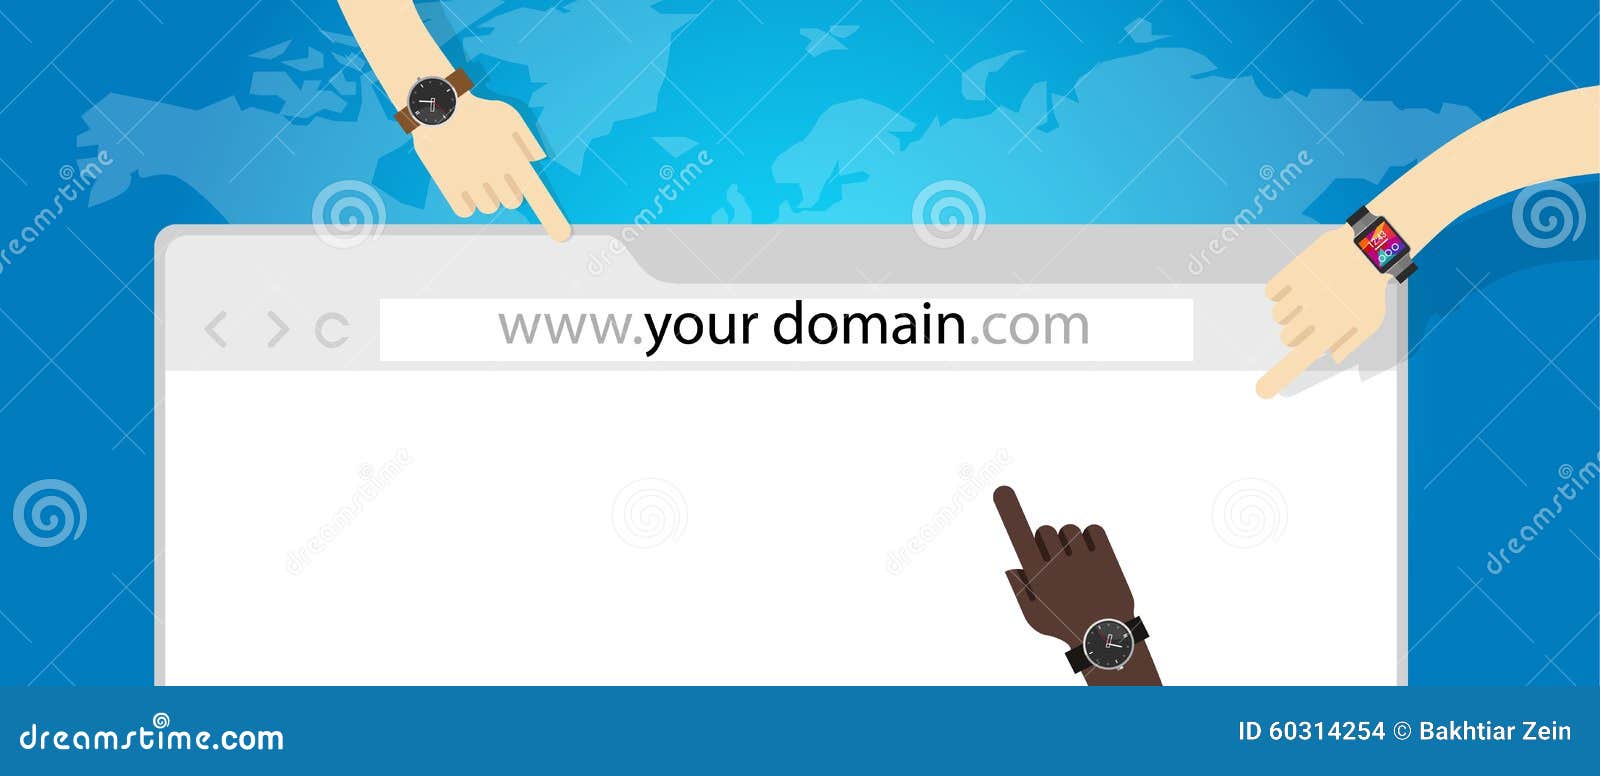 domain name web business internet concept url